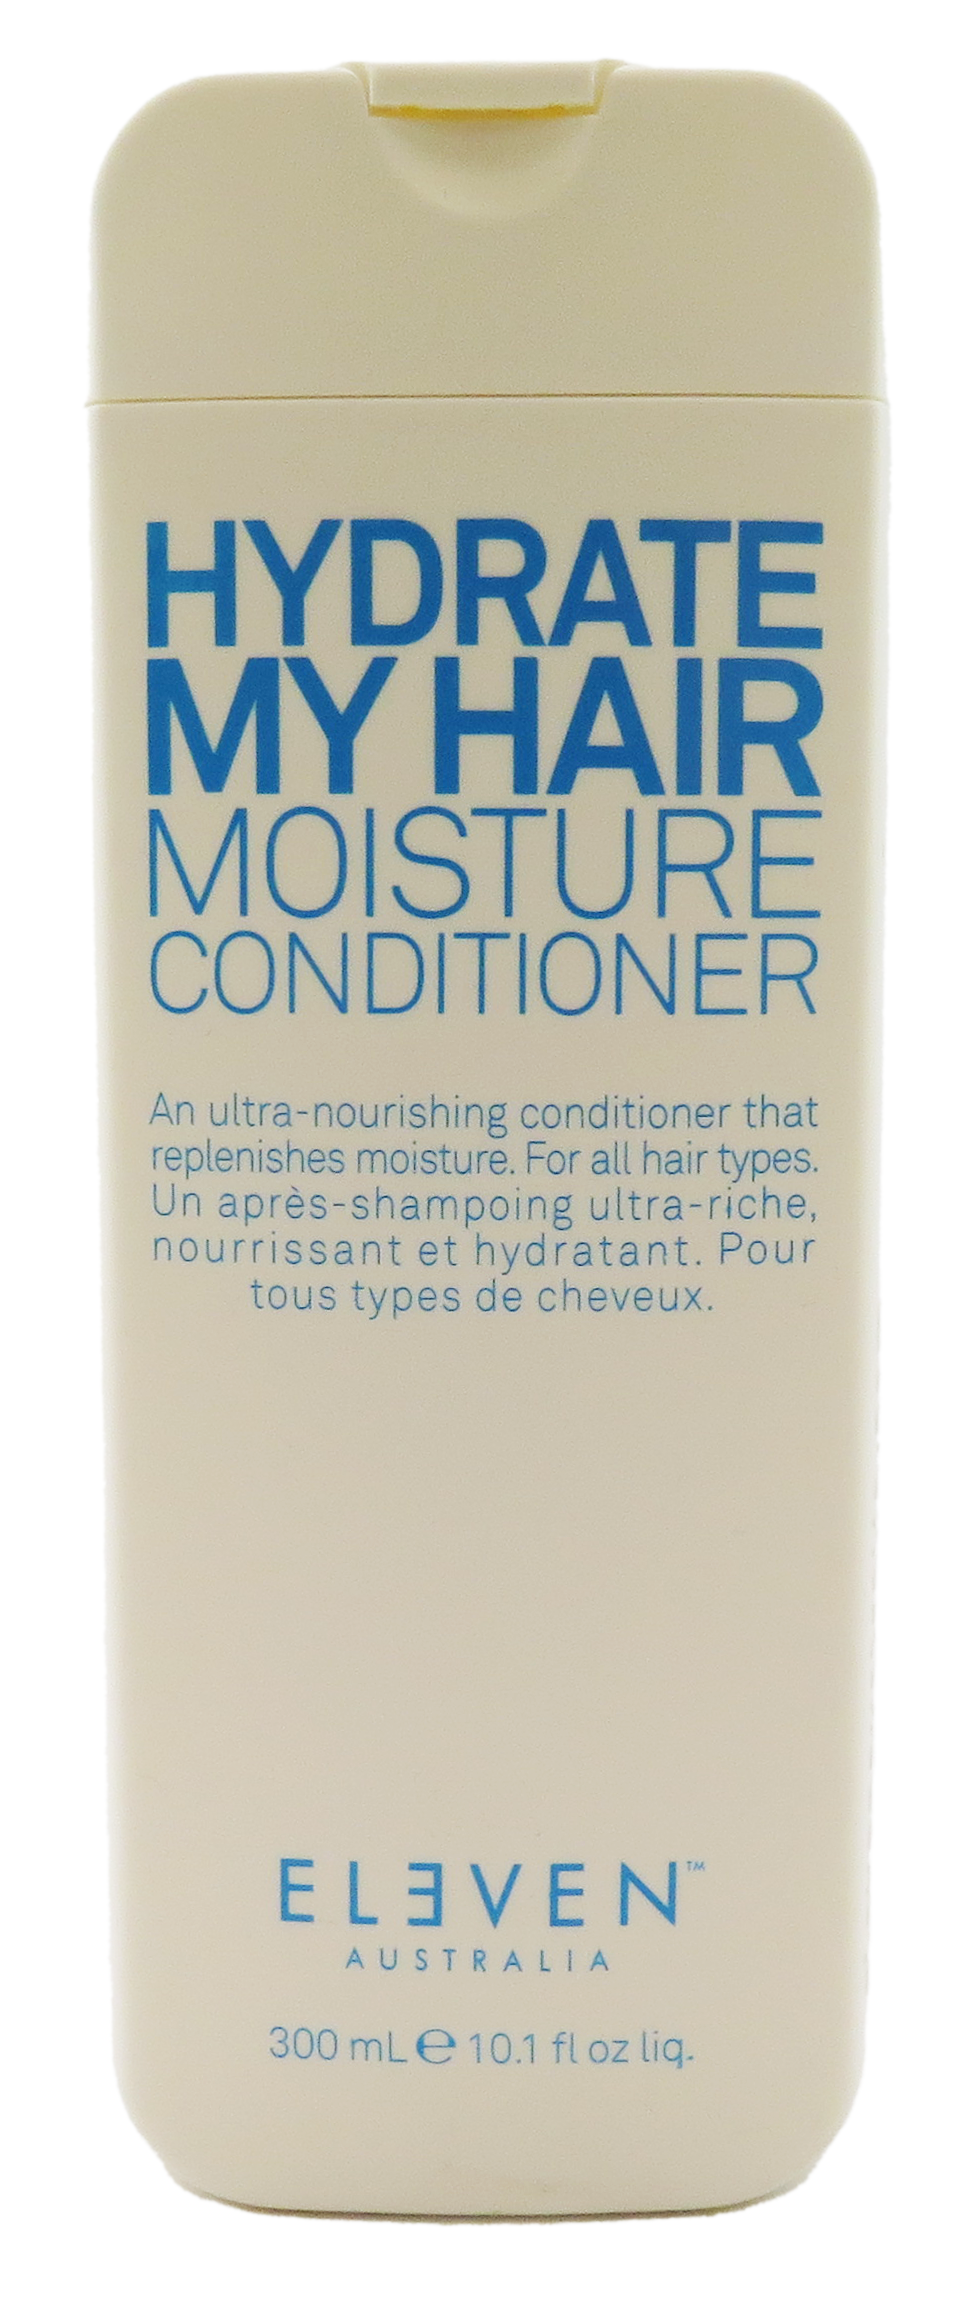 Eleven Australia Hydrate My Hair Moisture Conditioner 10.1 fl oz